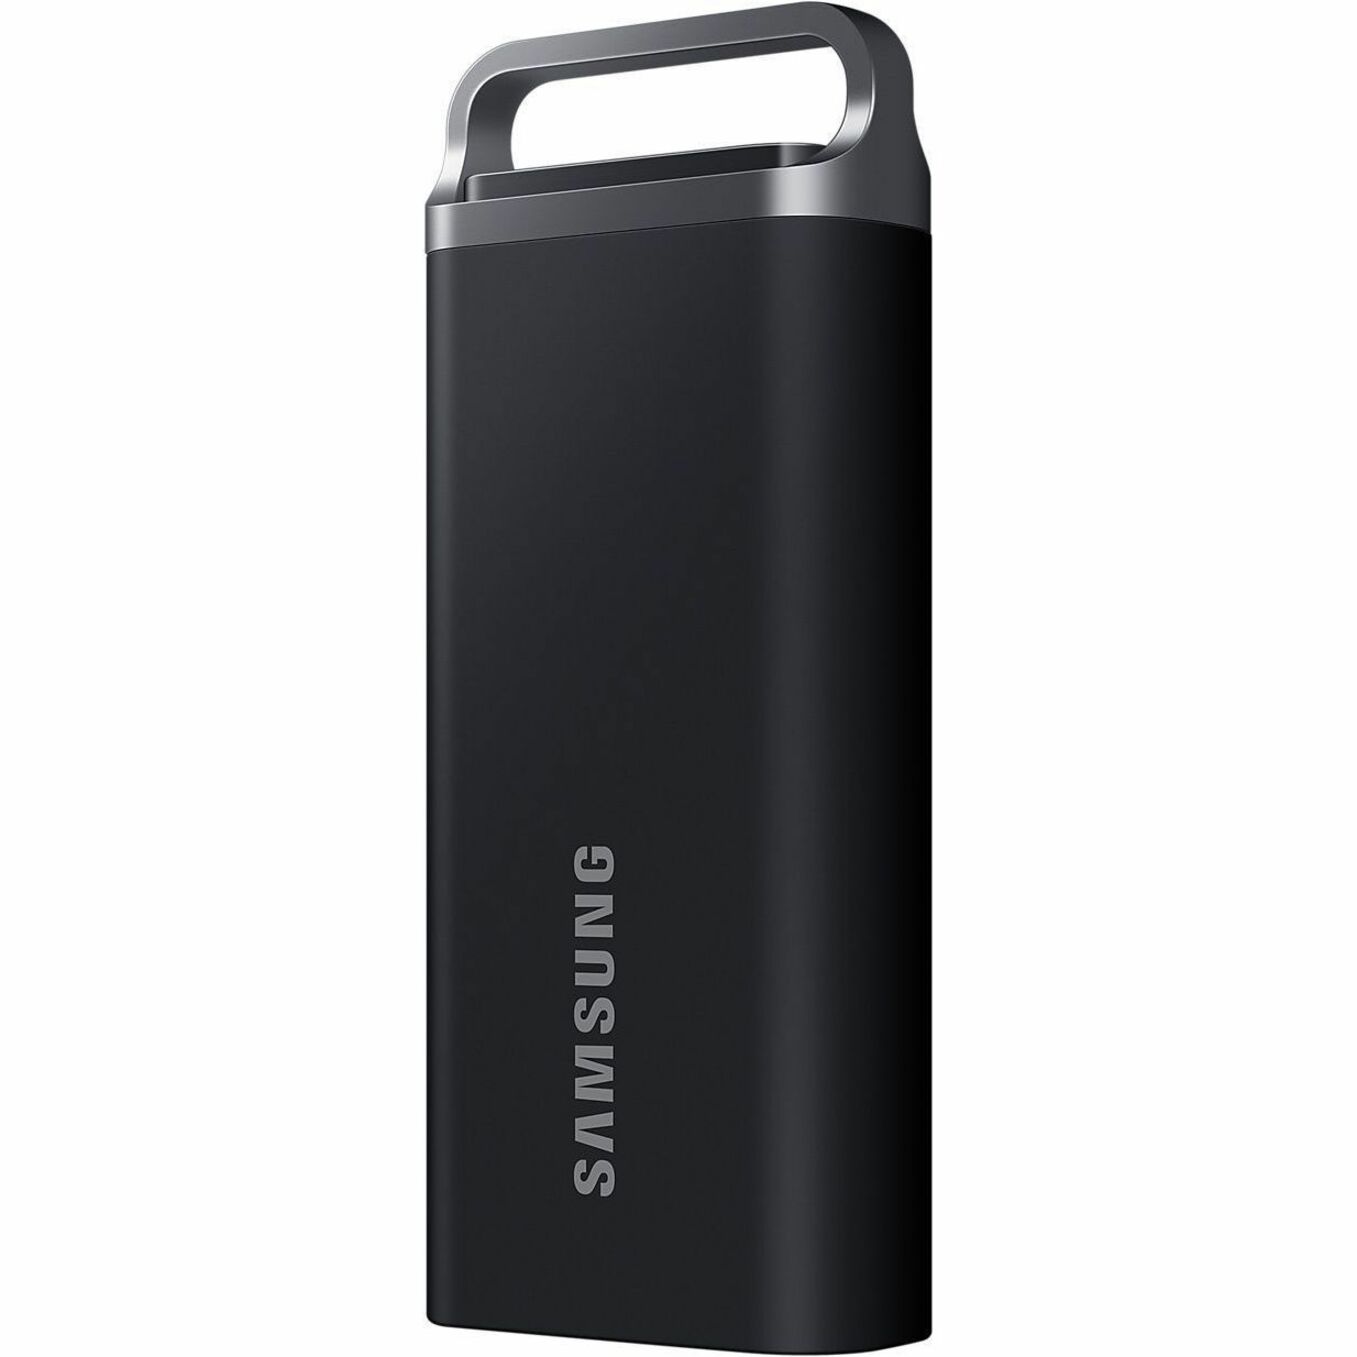 Samsung MU-PH4T0S/AM T5 EVO Solid State Drive, 4 TB, Portable, Black, 3 Year Warranty